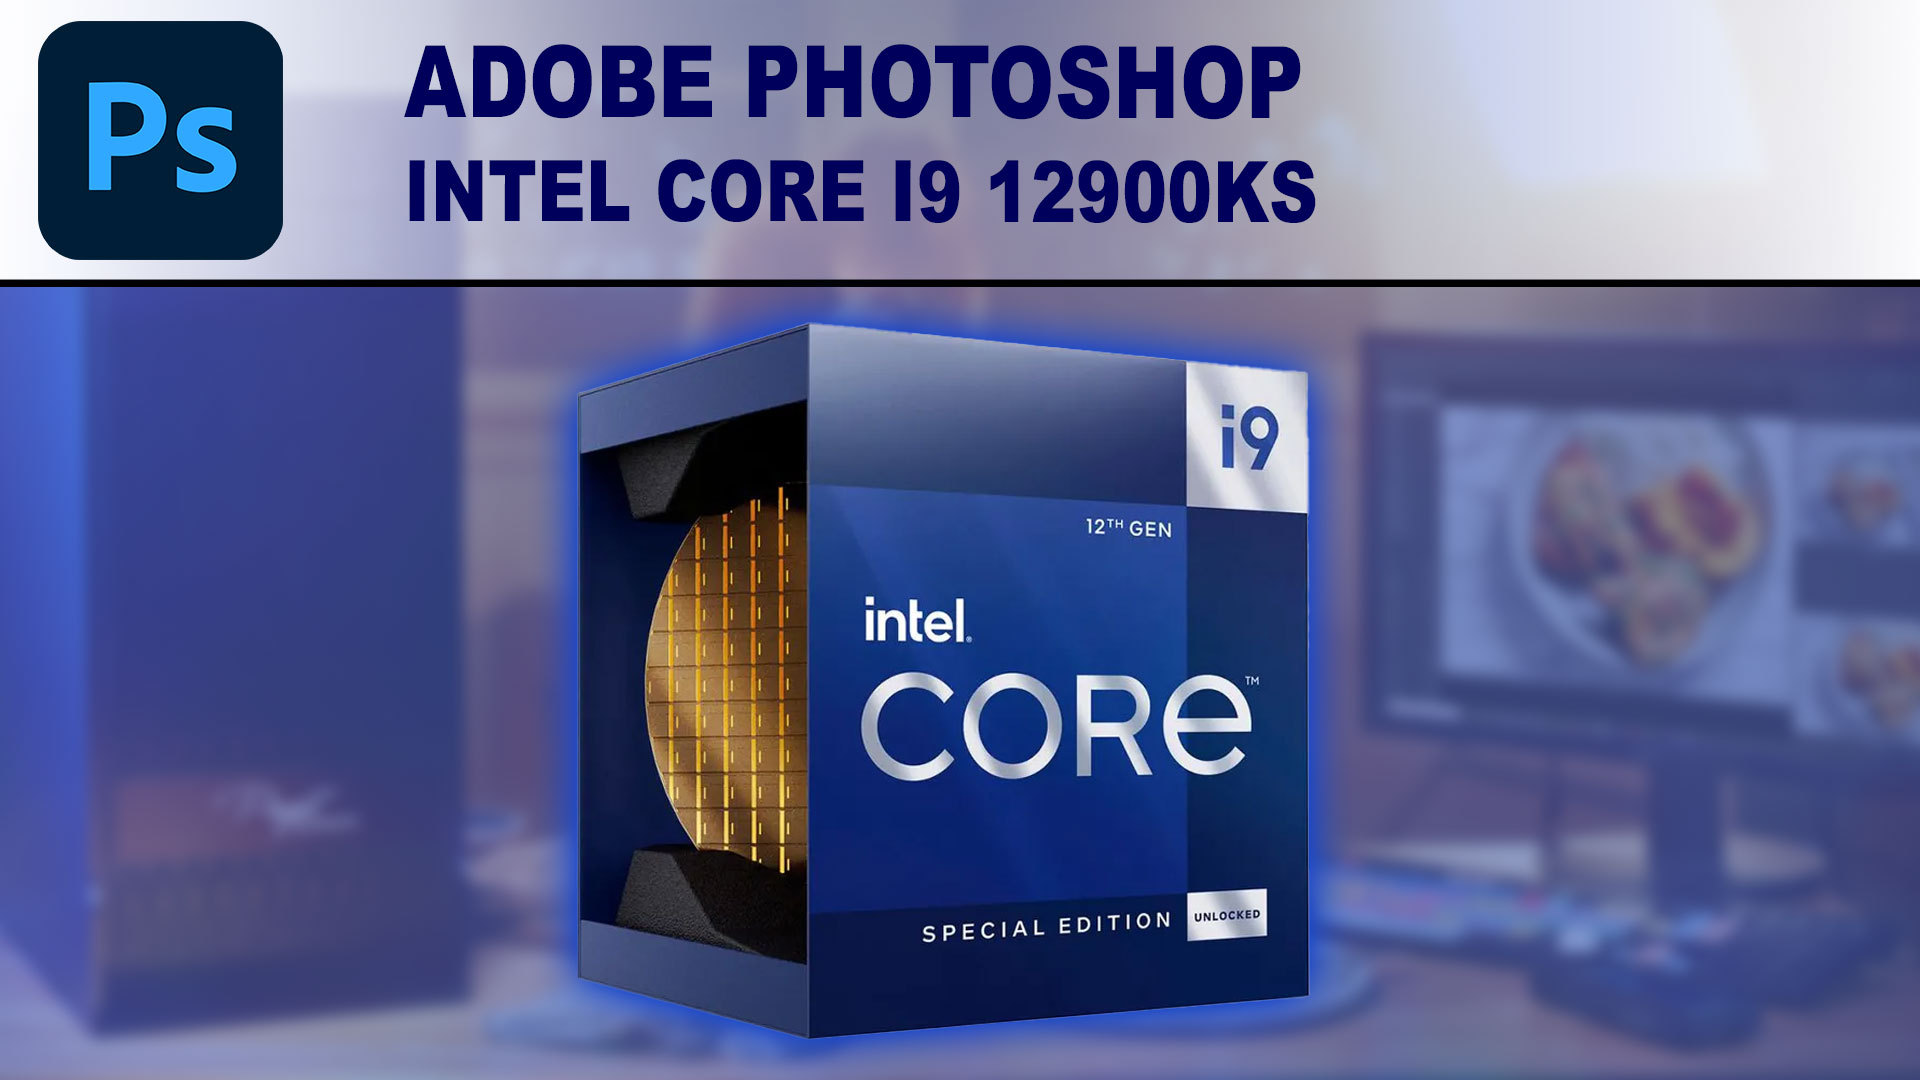 Intel Core i9 12900KS for Adobe Photoshop